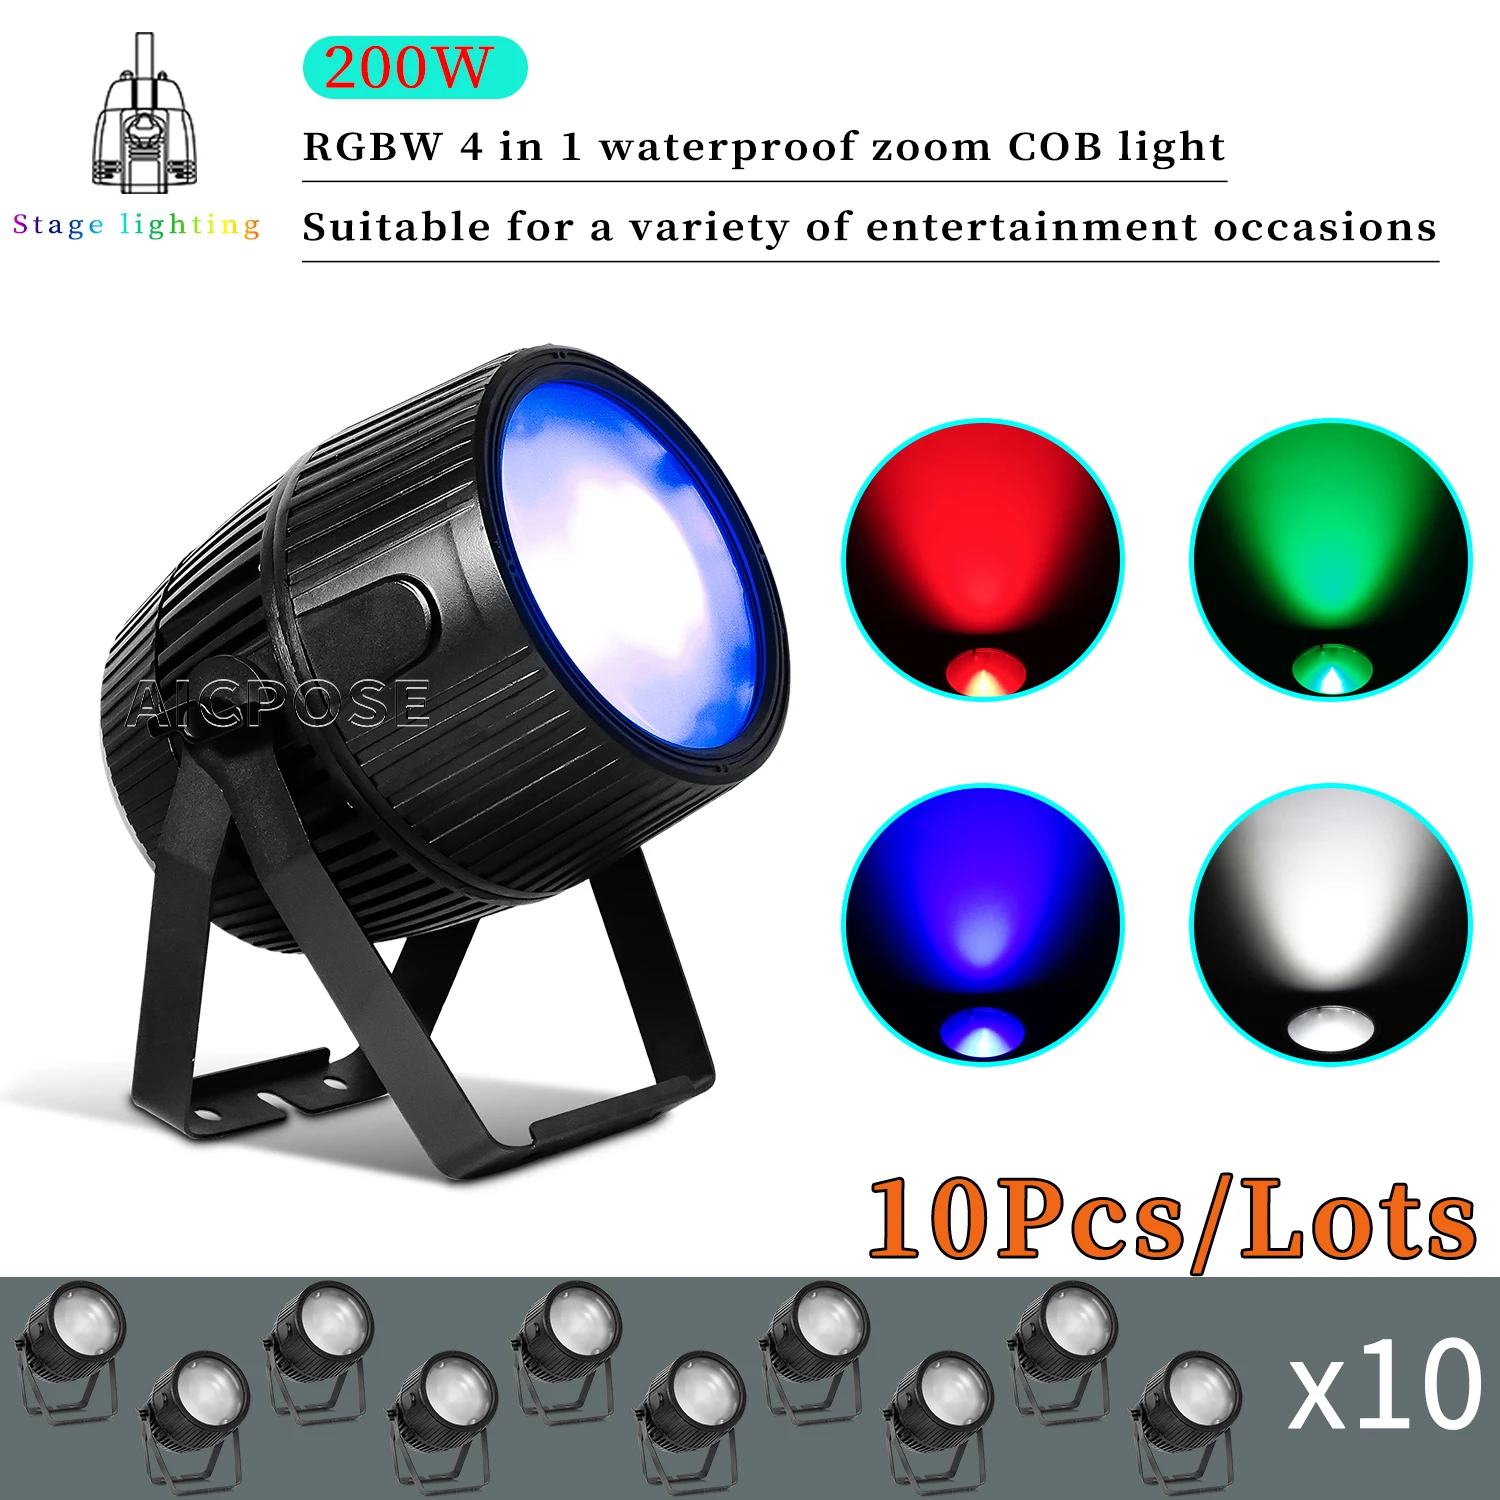 

10Pcs/Lots 200W LED Waterproof Zoom Stage Light RGBW 4in1 COB Audience Light Cool White/Warm White Spotlight DJ Disco Equipment